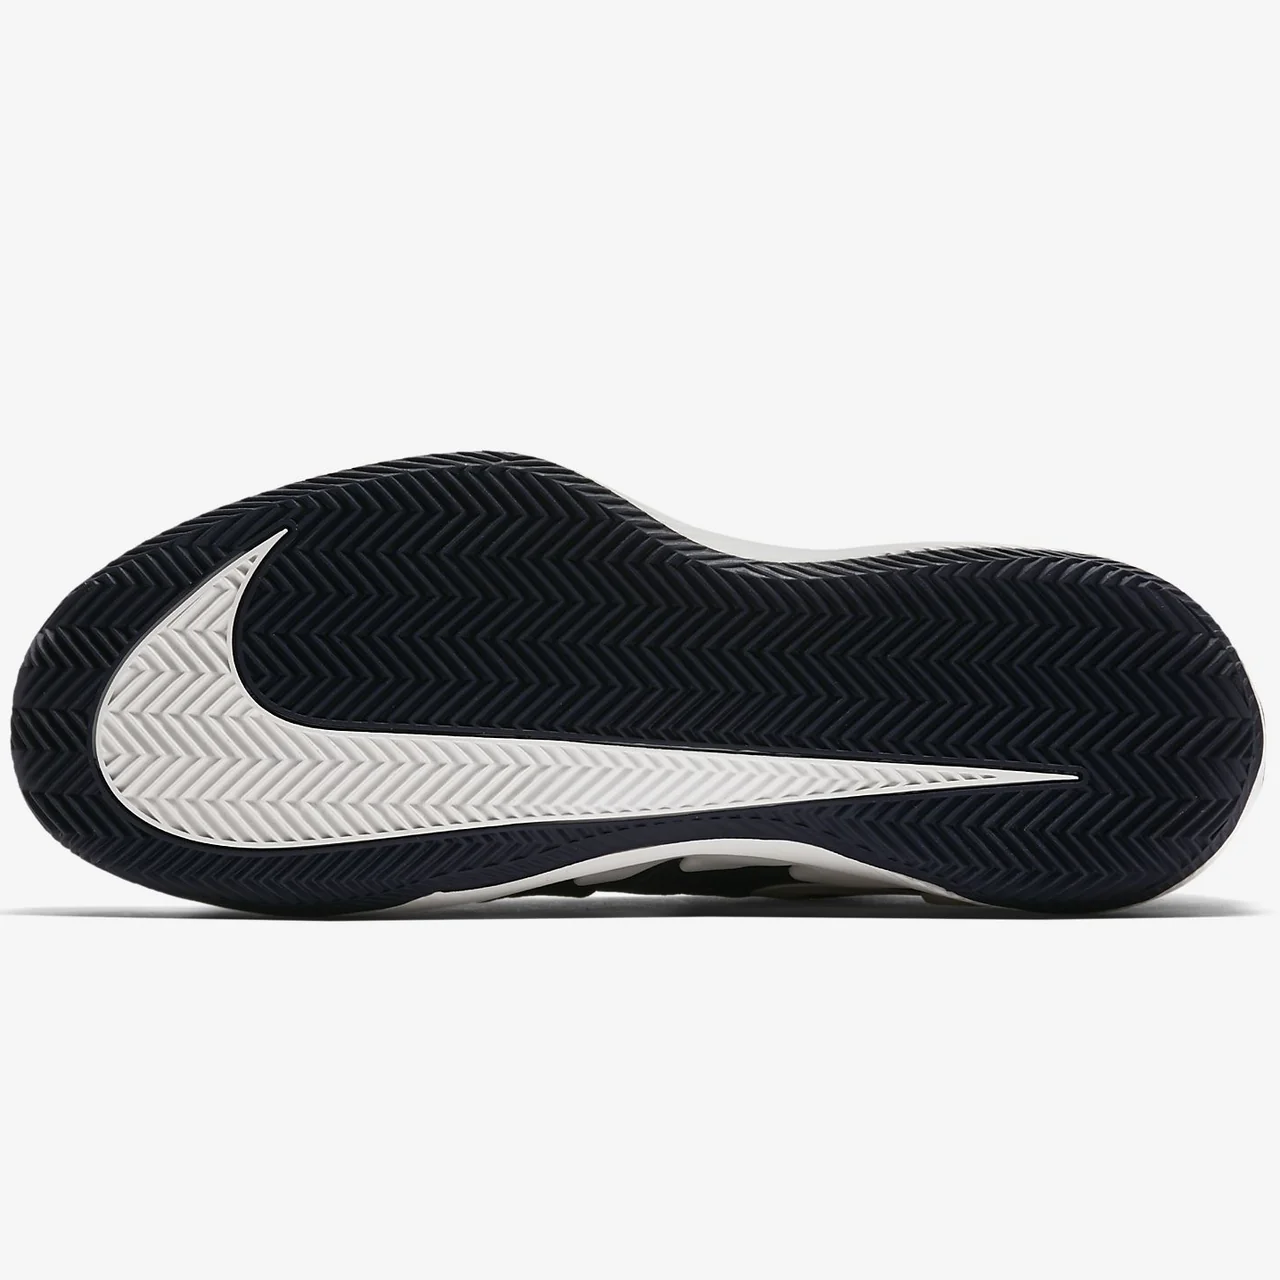 Nike Air Zoom Vapor X Blackened Blue/Orange Peel Clay/Padel Size 41